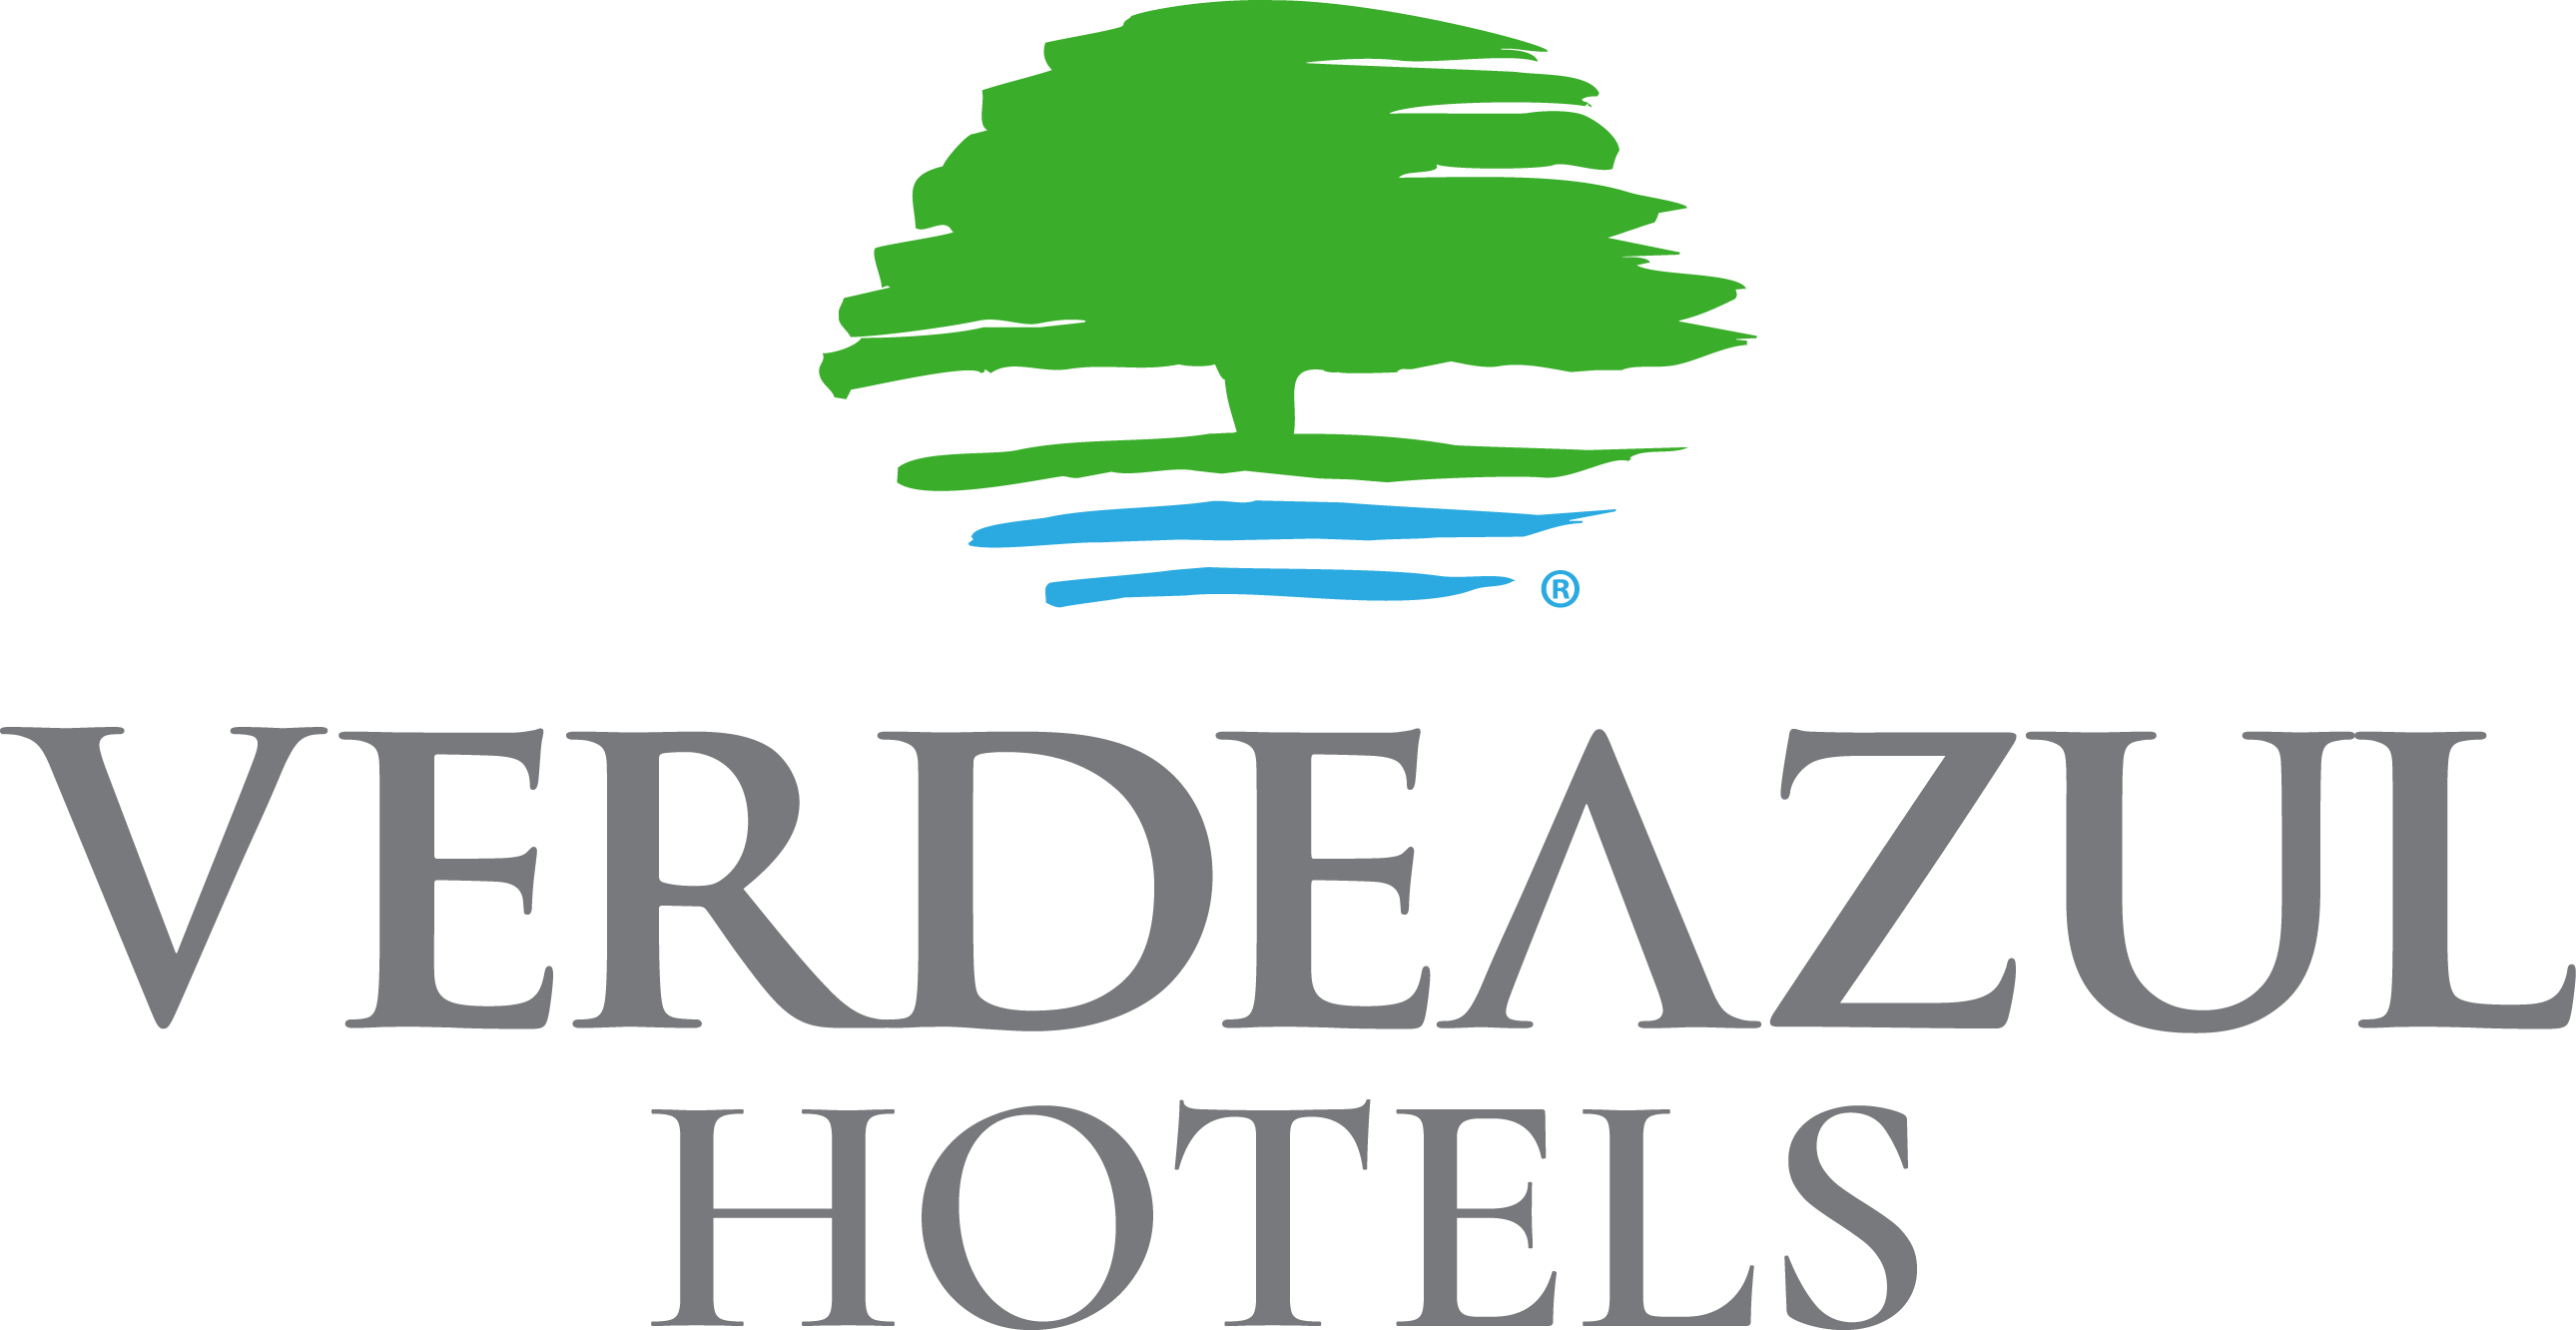 Grupo VerdeAzul Hotels Logo